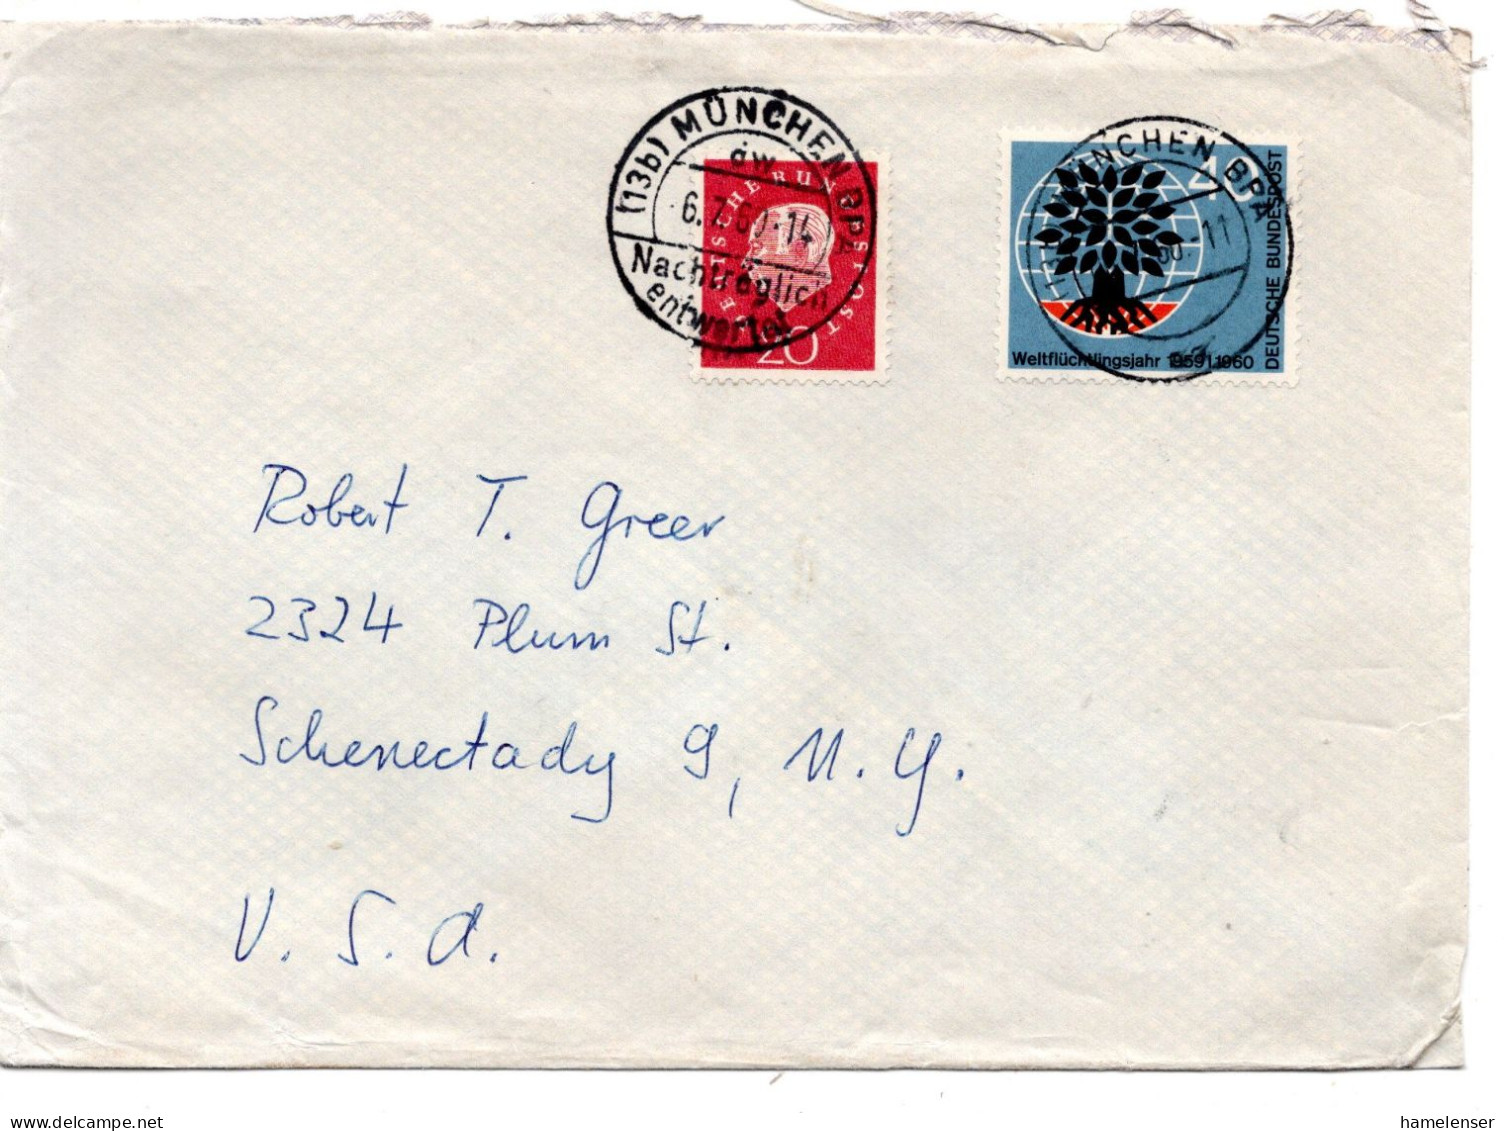 69477 - Bund - 1960 - 40Pfg Fluechtlingshilfe MiF A Bf MUENCHEN -> MUENCHEN - NACHTRAEGLICH ... -> Schenectady, NY (USA) - Covers & Documents